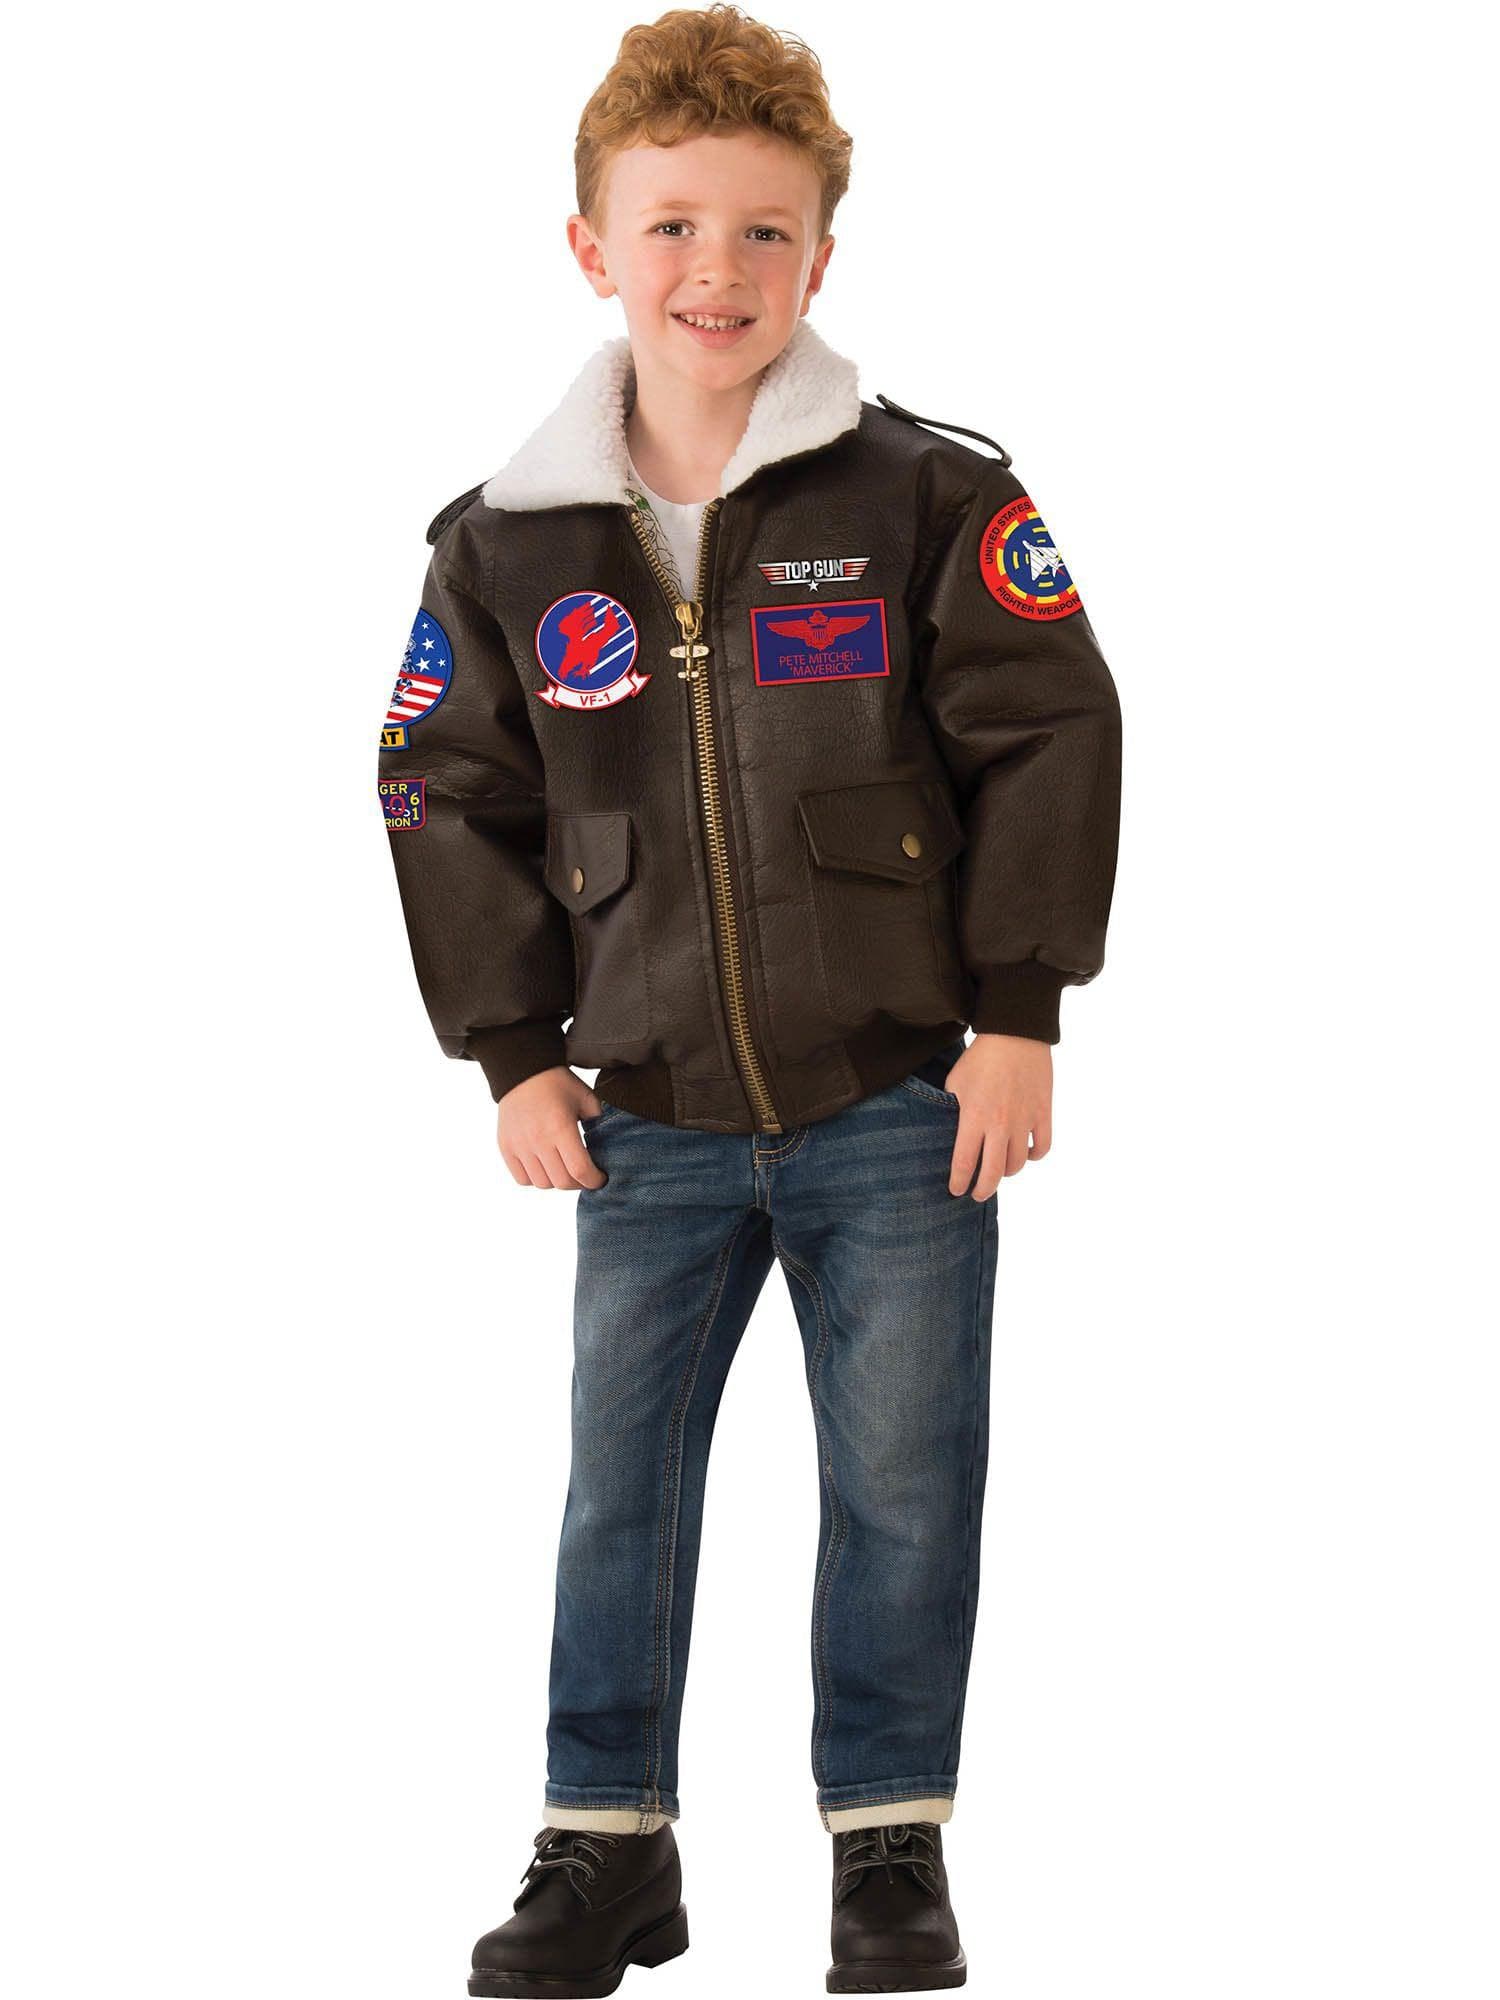 Kids Top Gun Jacket - costumes.com